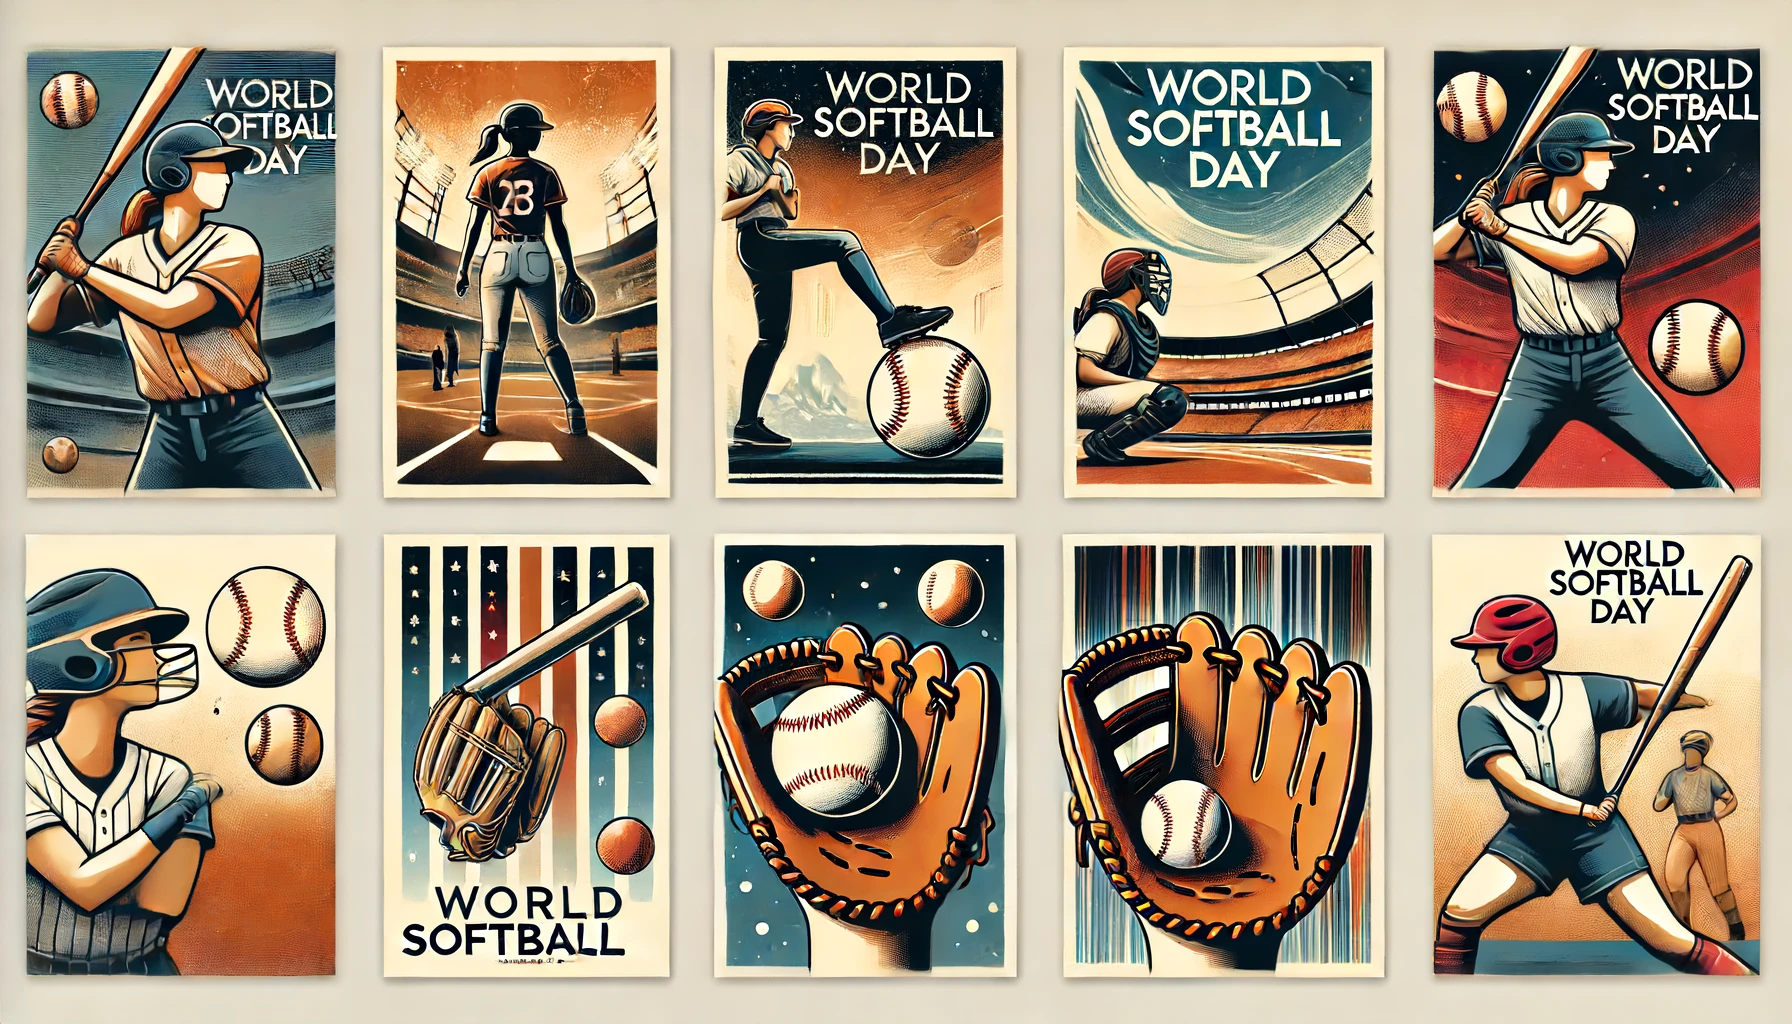 Celebrate Team Spirit on World Softball Day